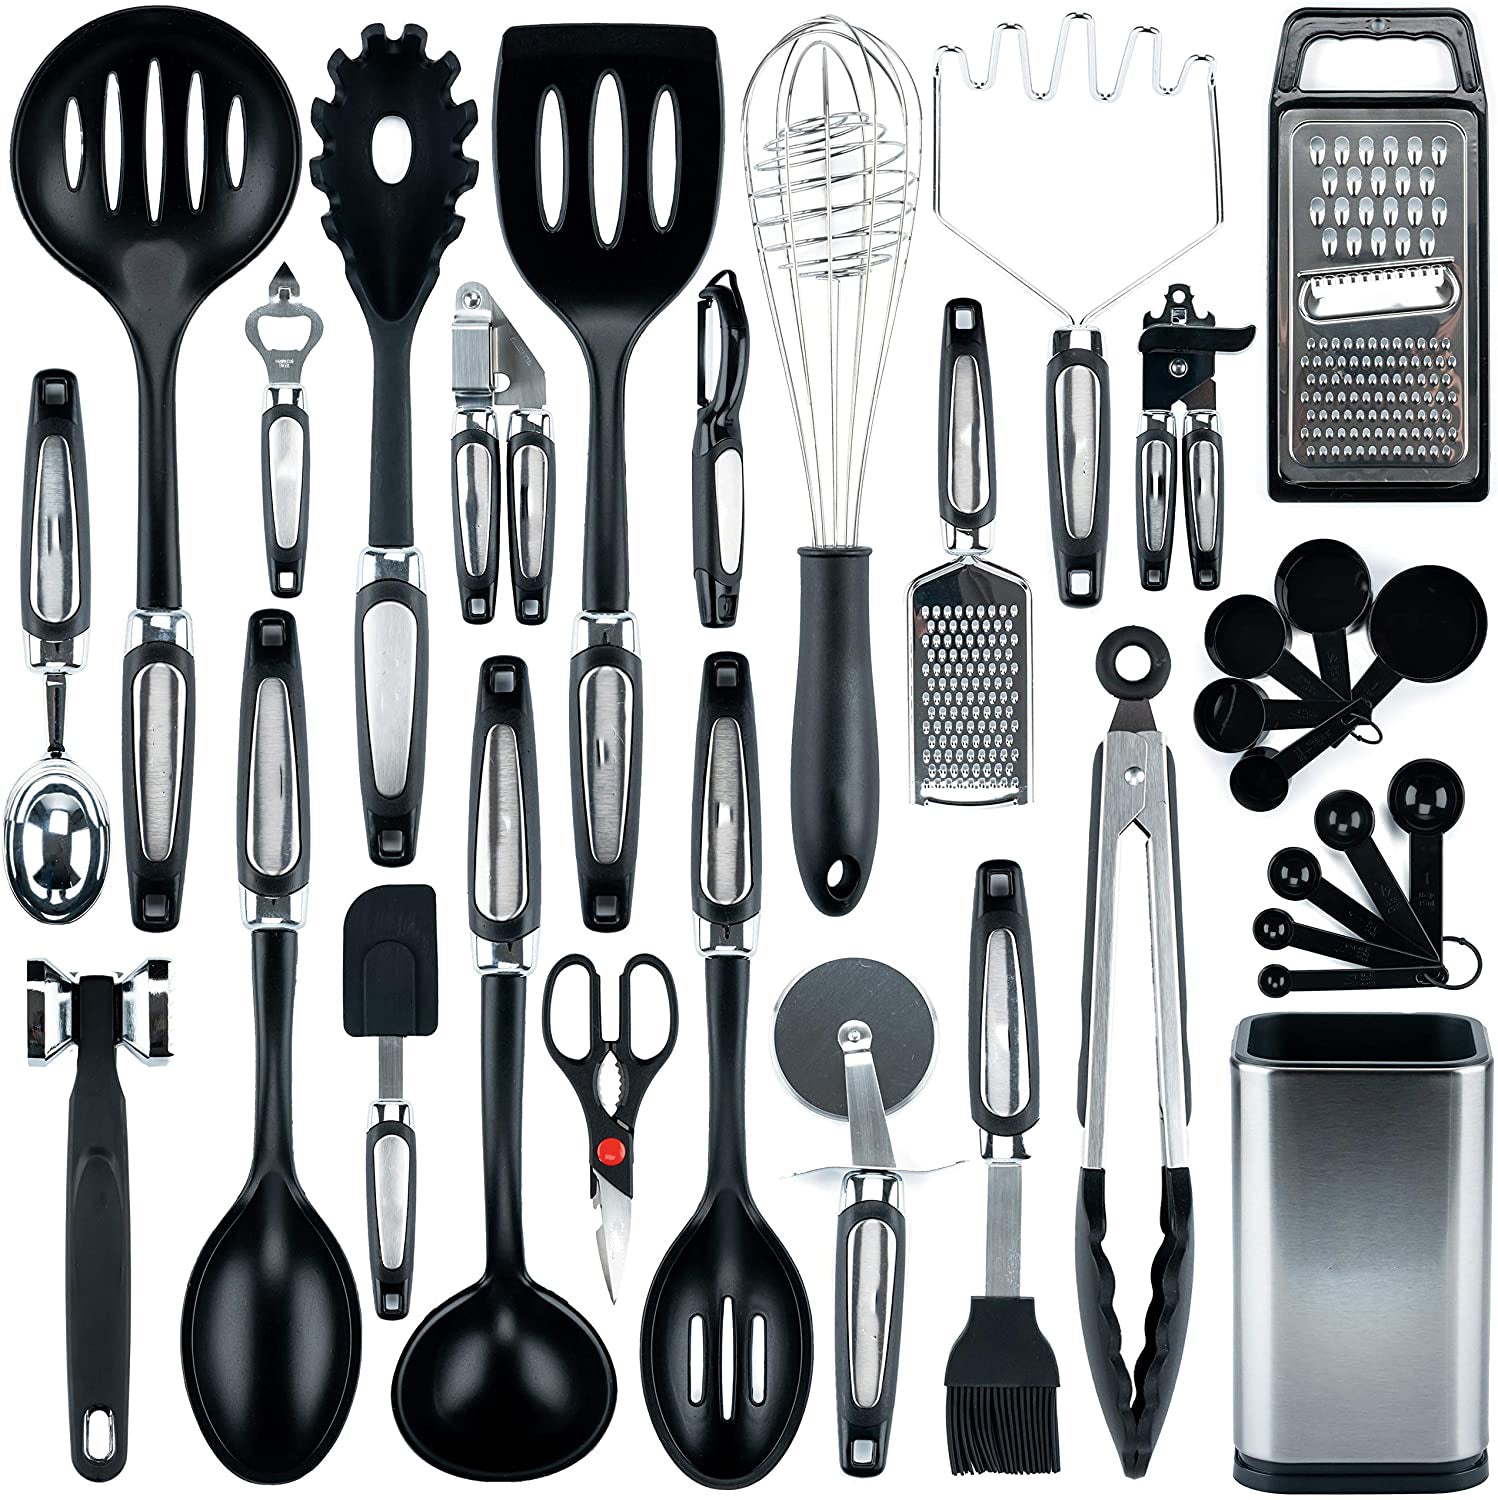 Travel Utensils Set Stainless Steel Spoon/Chopsticks/Fork With Holder Case  Housewarming Gift - Walmart.com